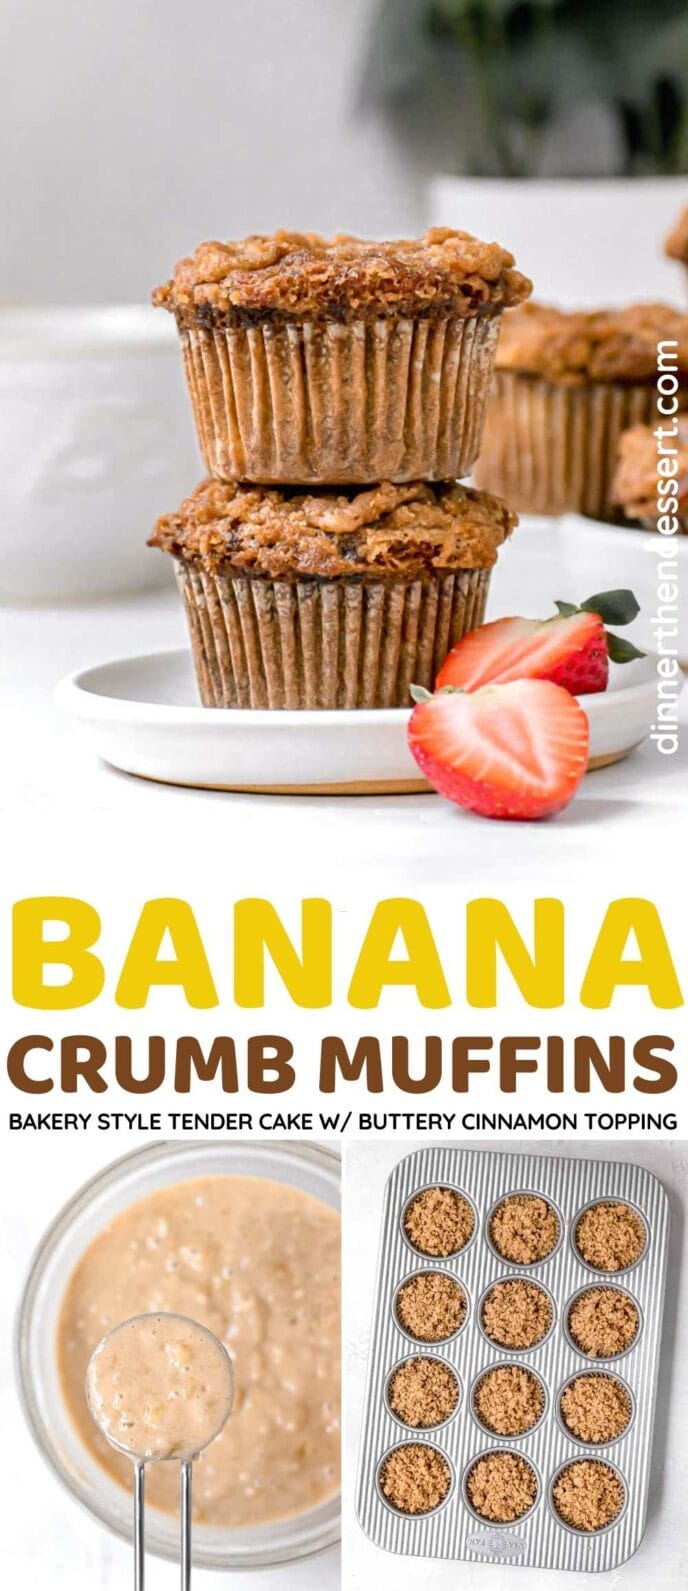 Banana Crumb Muffins Collage